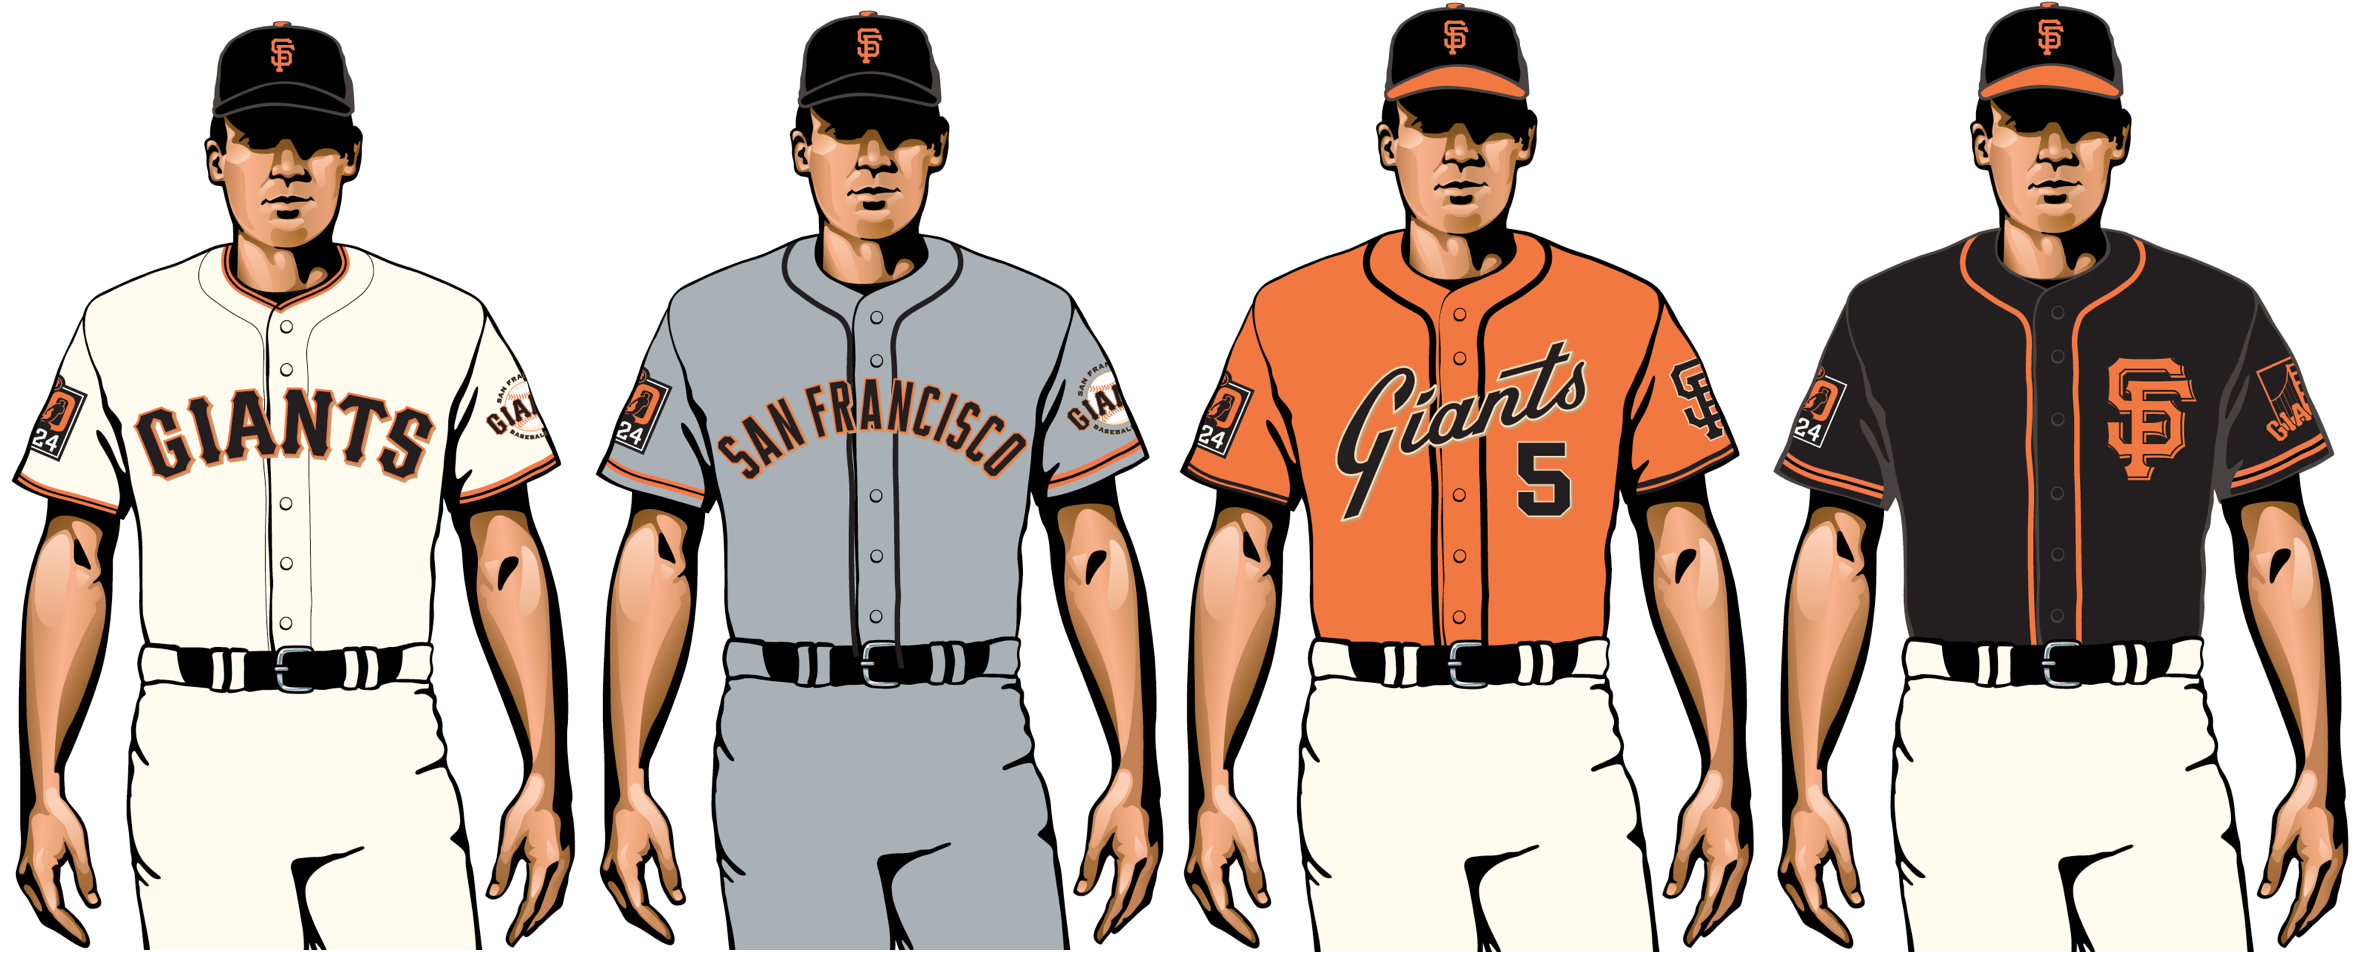 giants baseball uniform